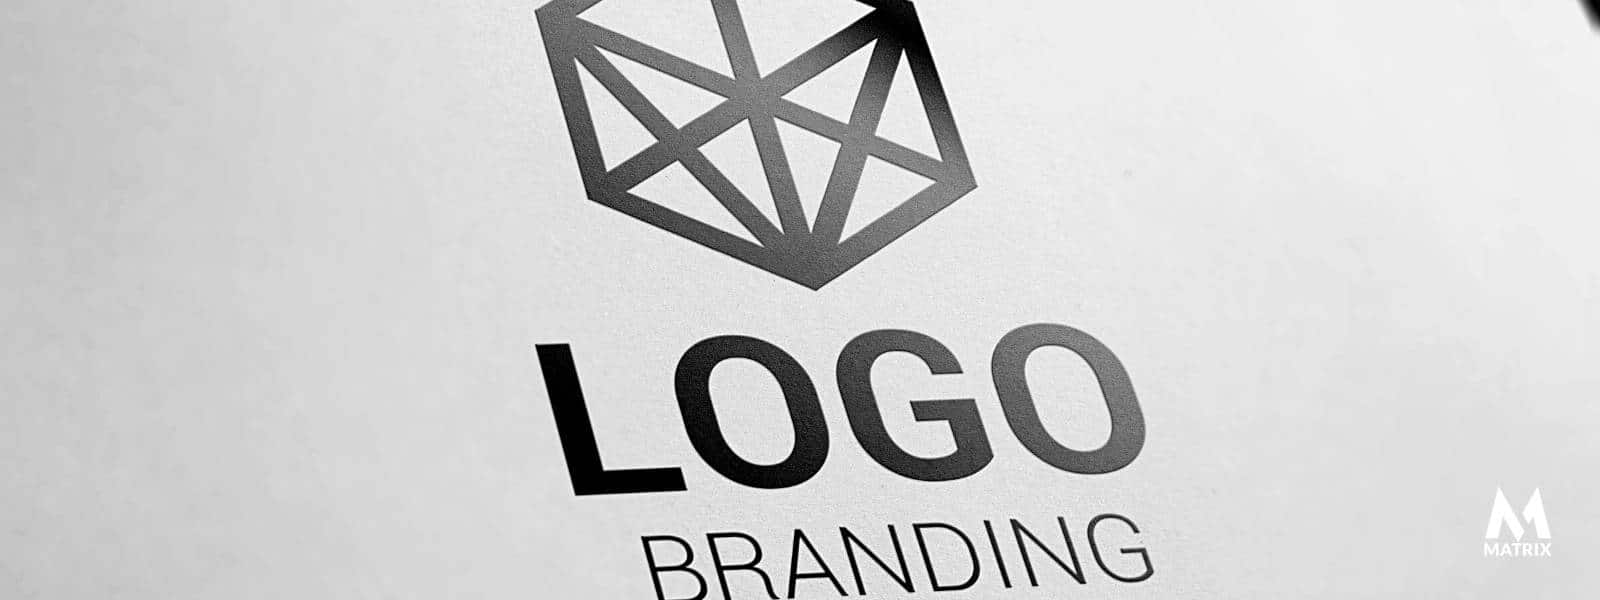 Logo Design Color Theory 